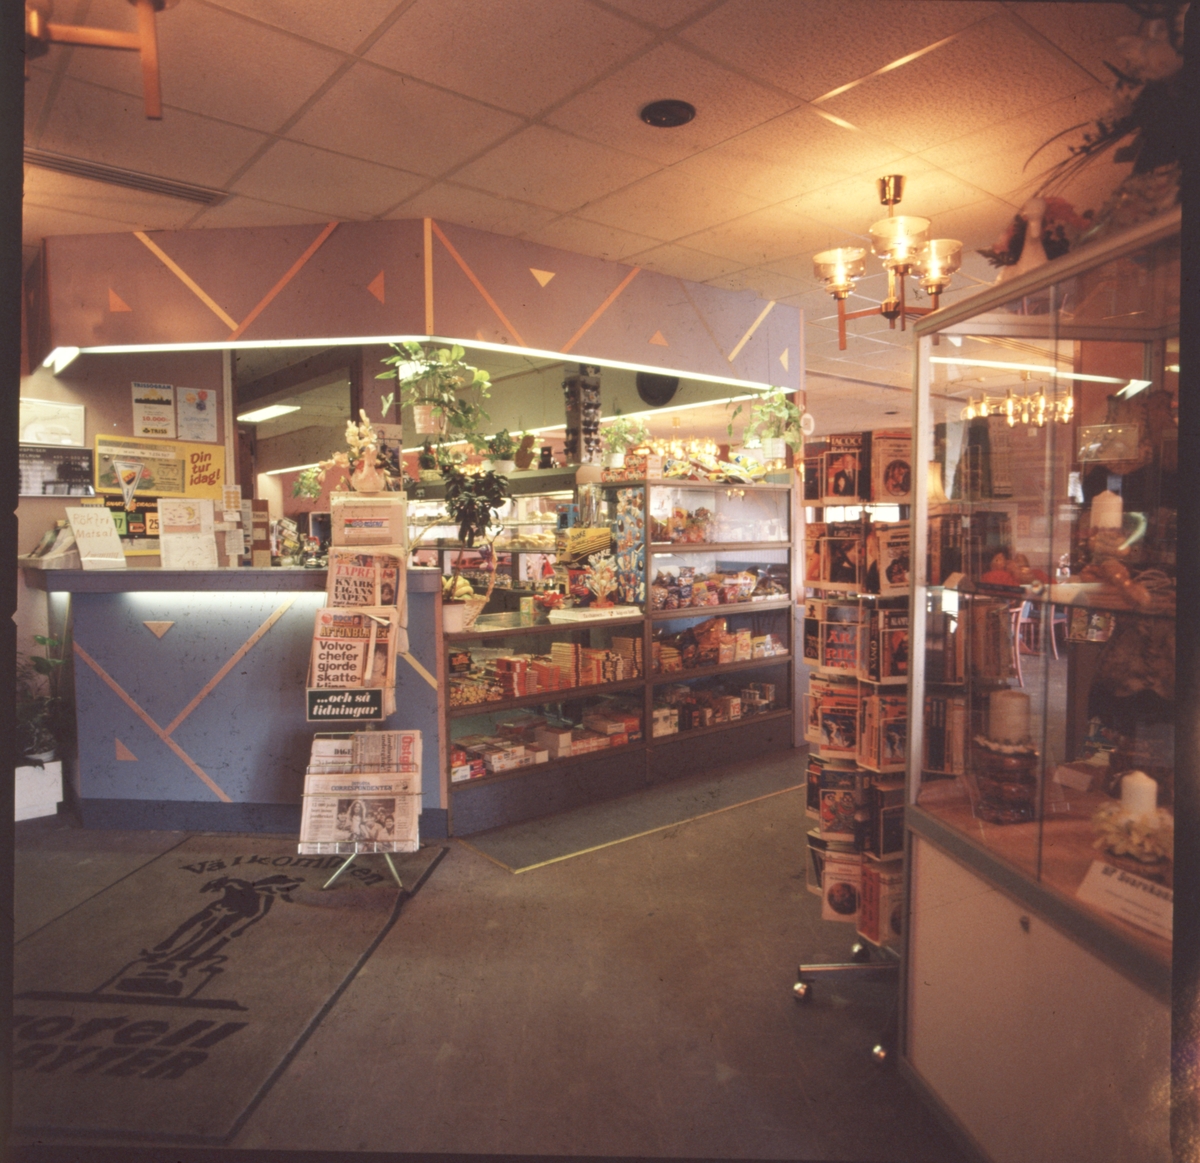 Entrén på Motell Filbyter på 1990-talet. Lobby. Kiosk. Tidningar. Restautang. Bilder ur Motell Filbyters arkiv.